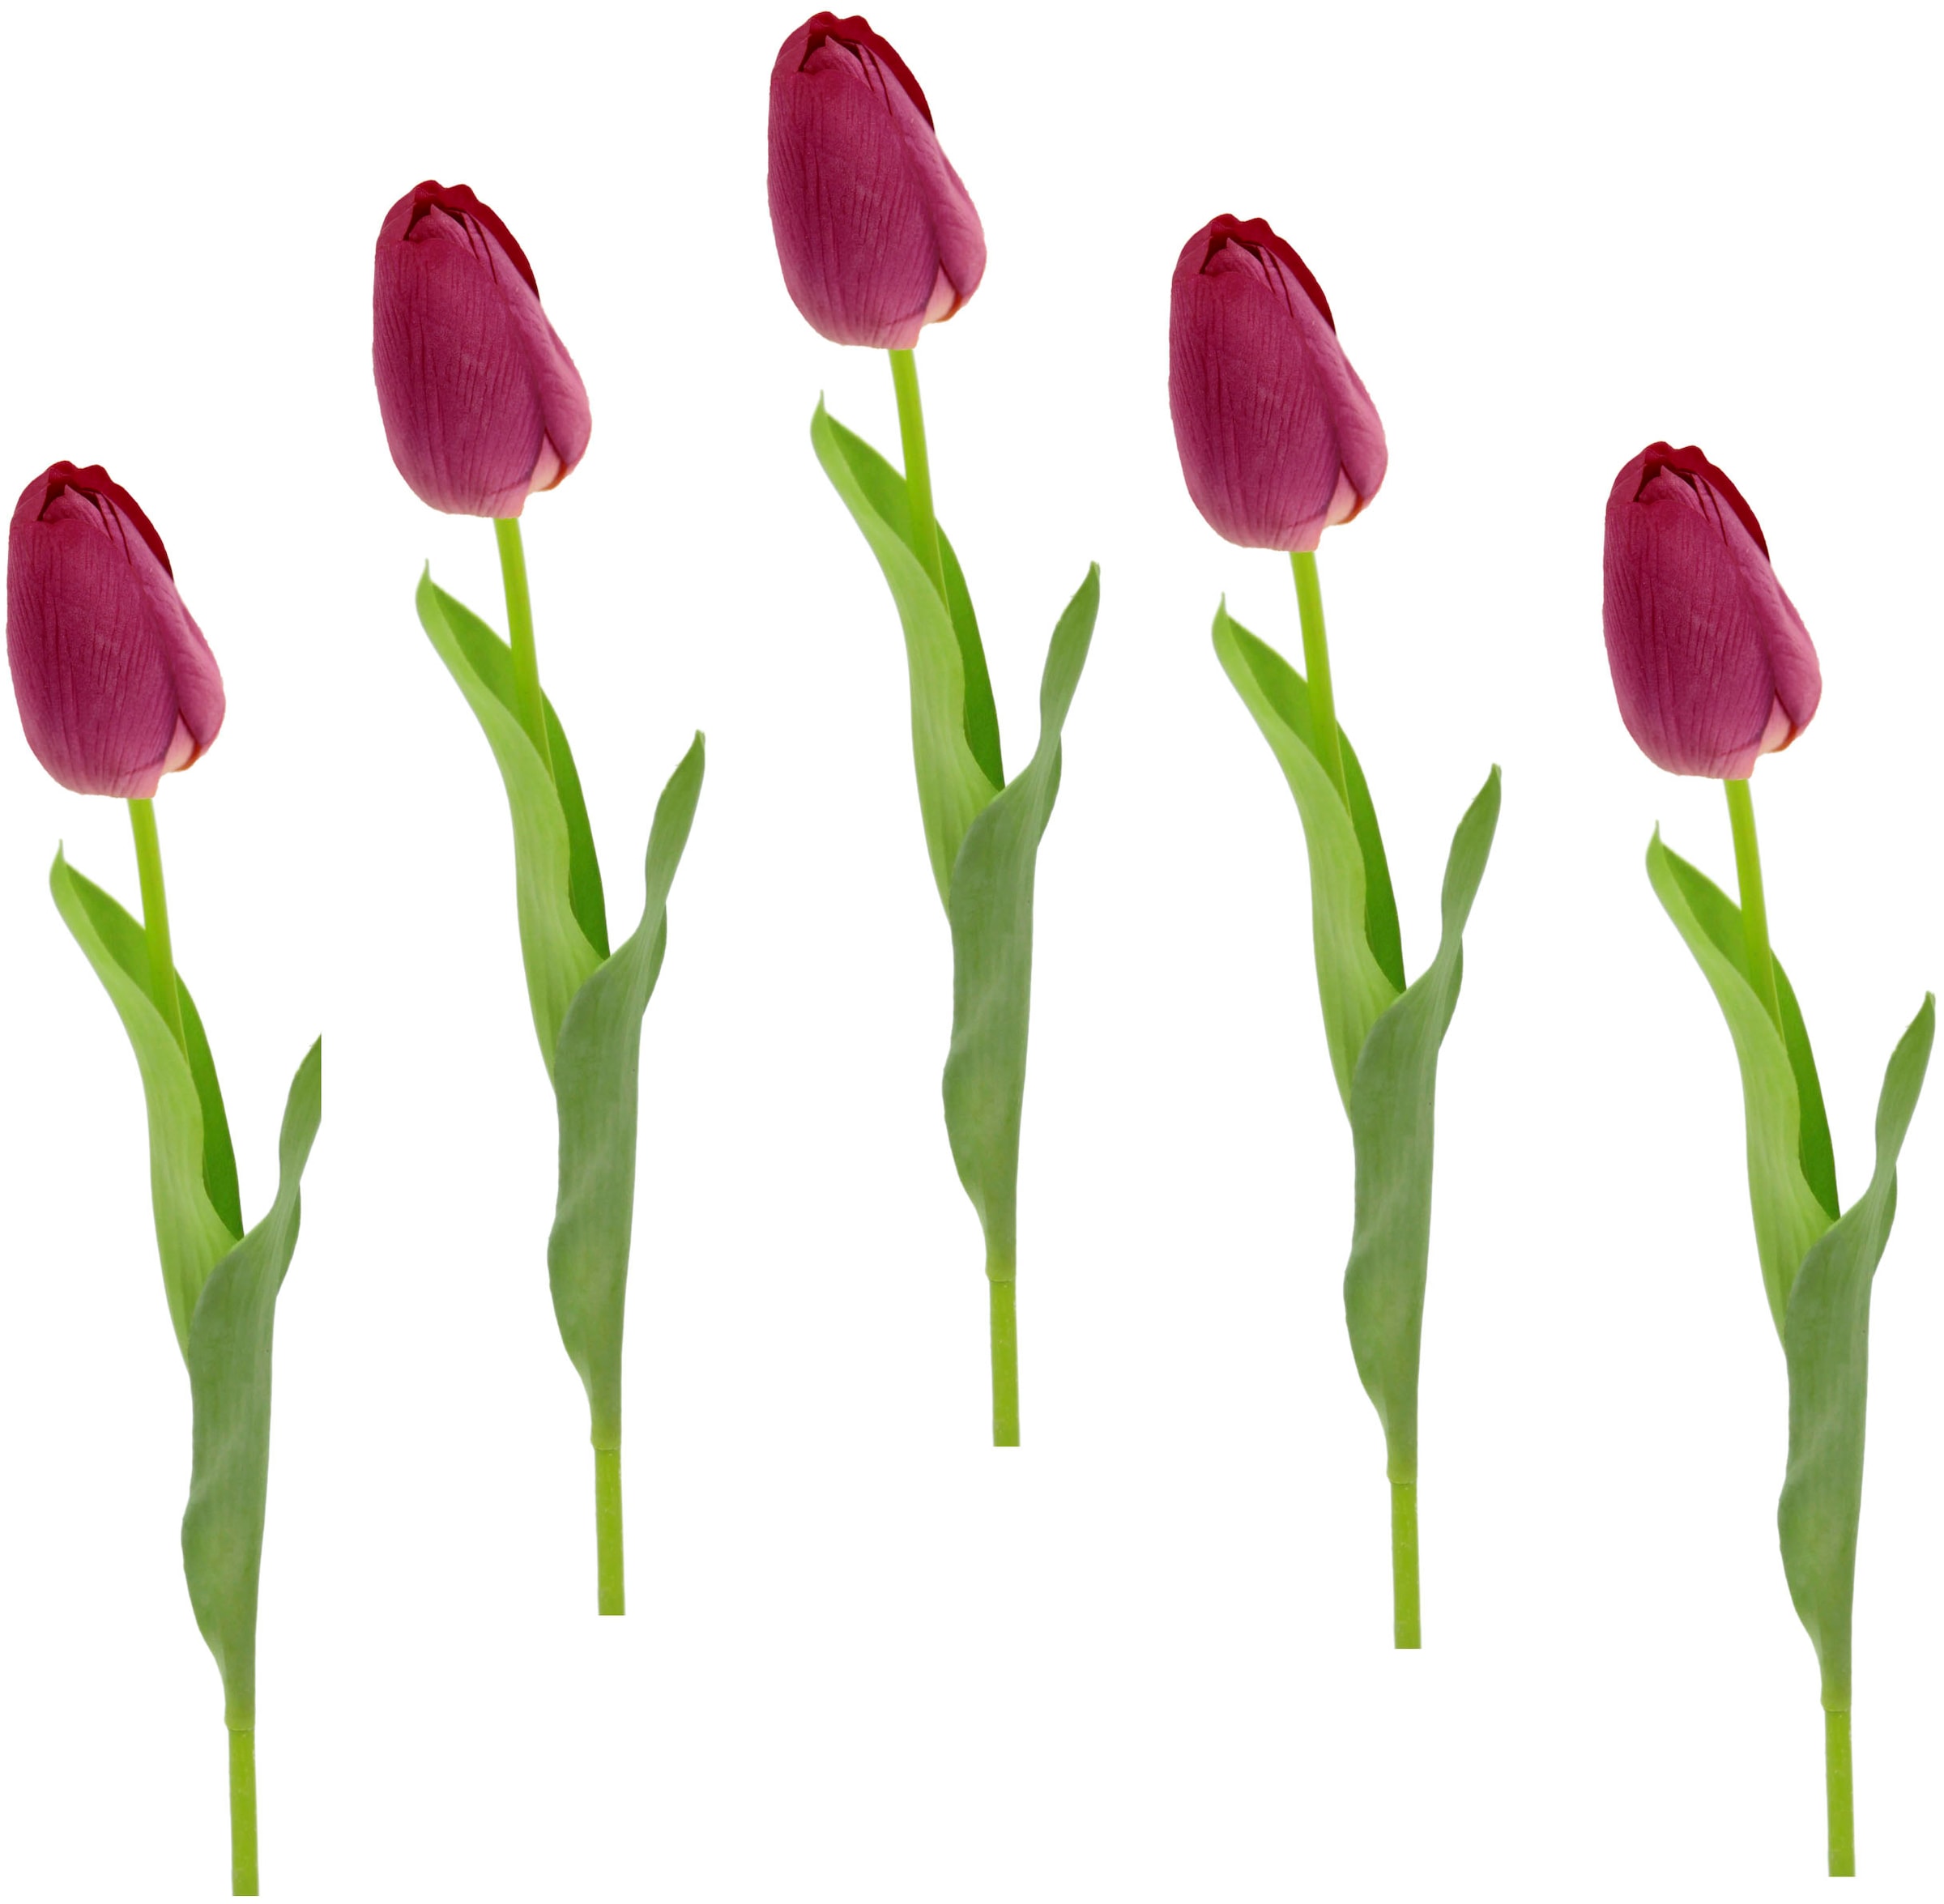 I.GE.A. Kunstblume »Real Touch Kunstblumen, künstliche Tulpenknospen, Tulpen«, Set 5er jetzt kaufen Stielblume